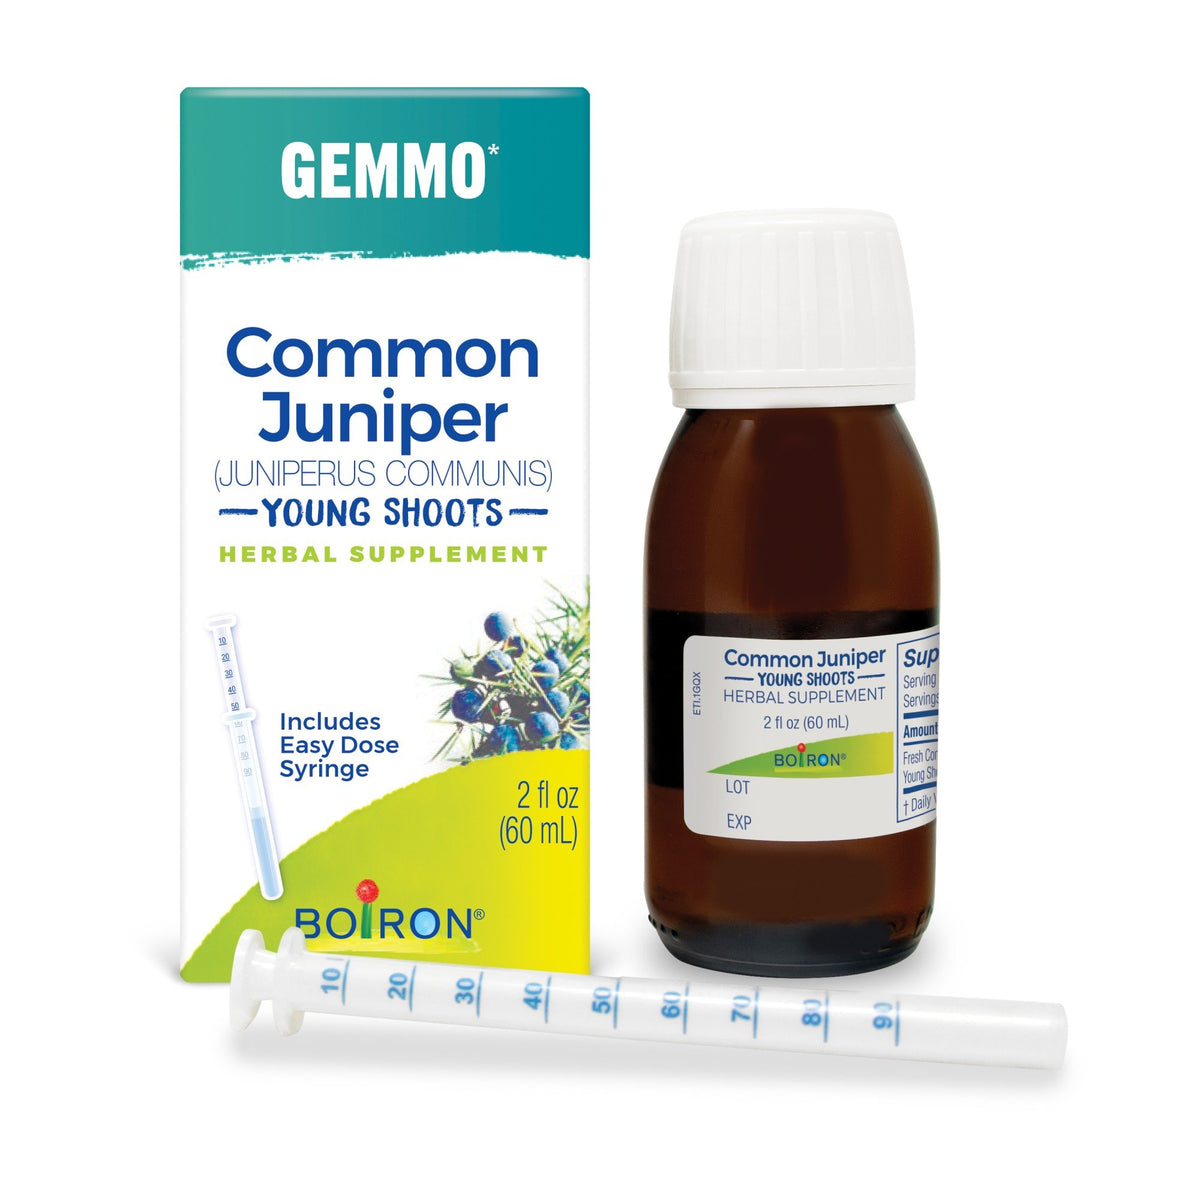 Boiron Common Juniper, Young Shoots Herbal Supplement 2 fl oz Liquid